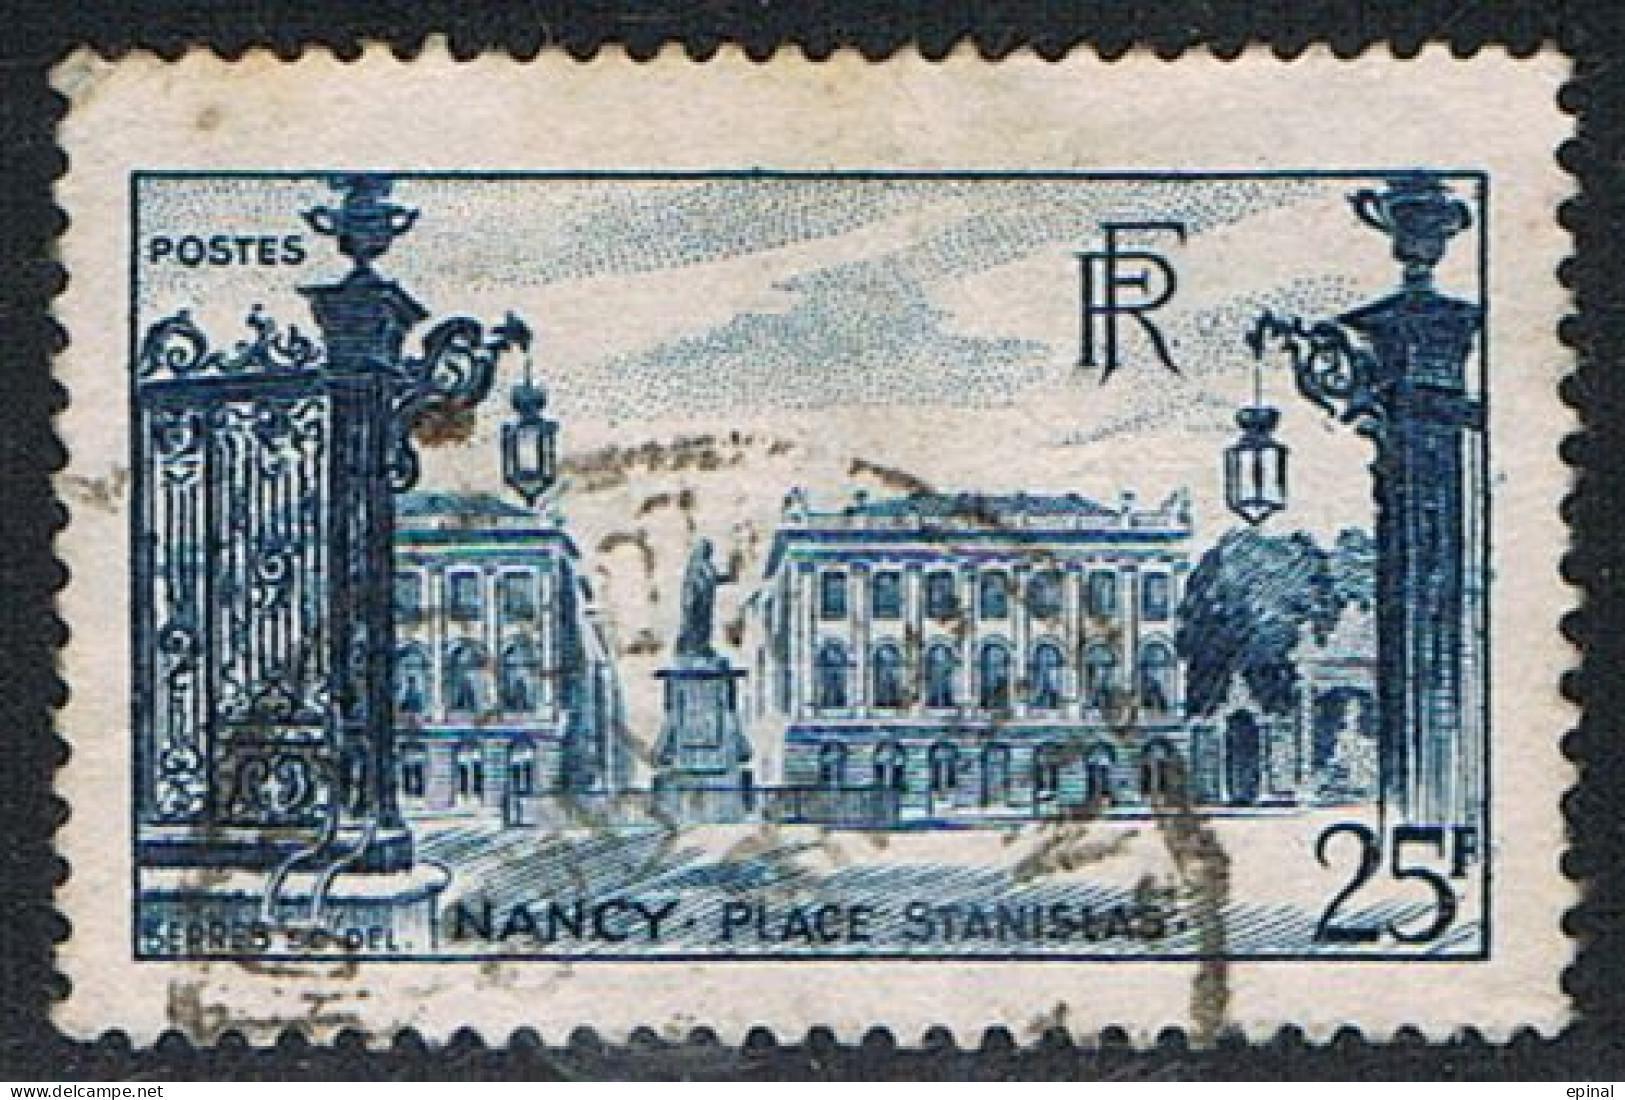 FRANCE : N° 822 Oblitéré (Place Stanislas, à Nancy) - PRIX FIXE - - Used Stamps